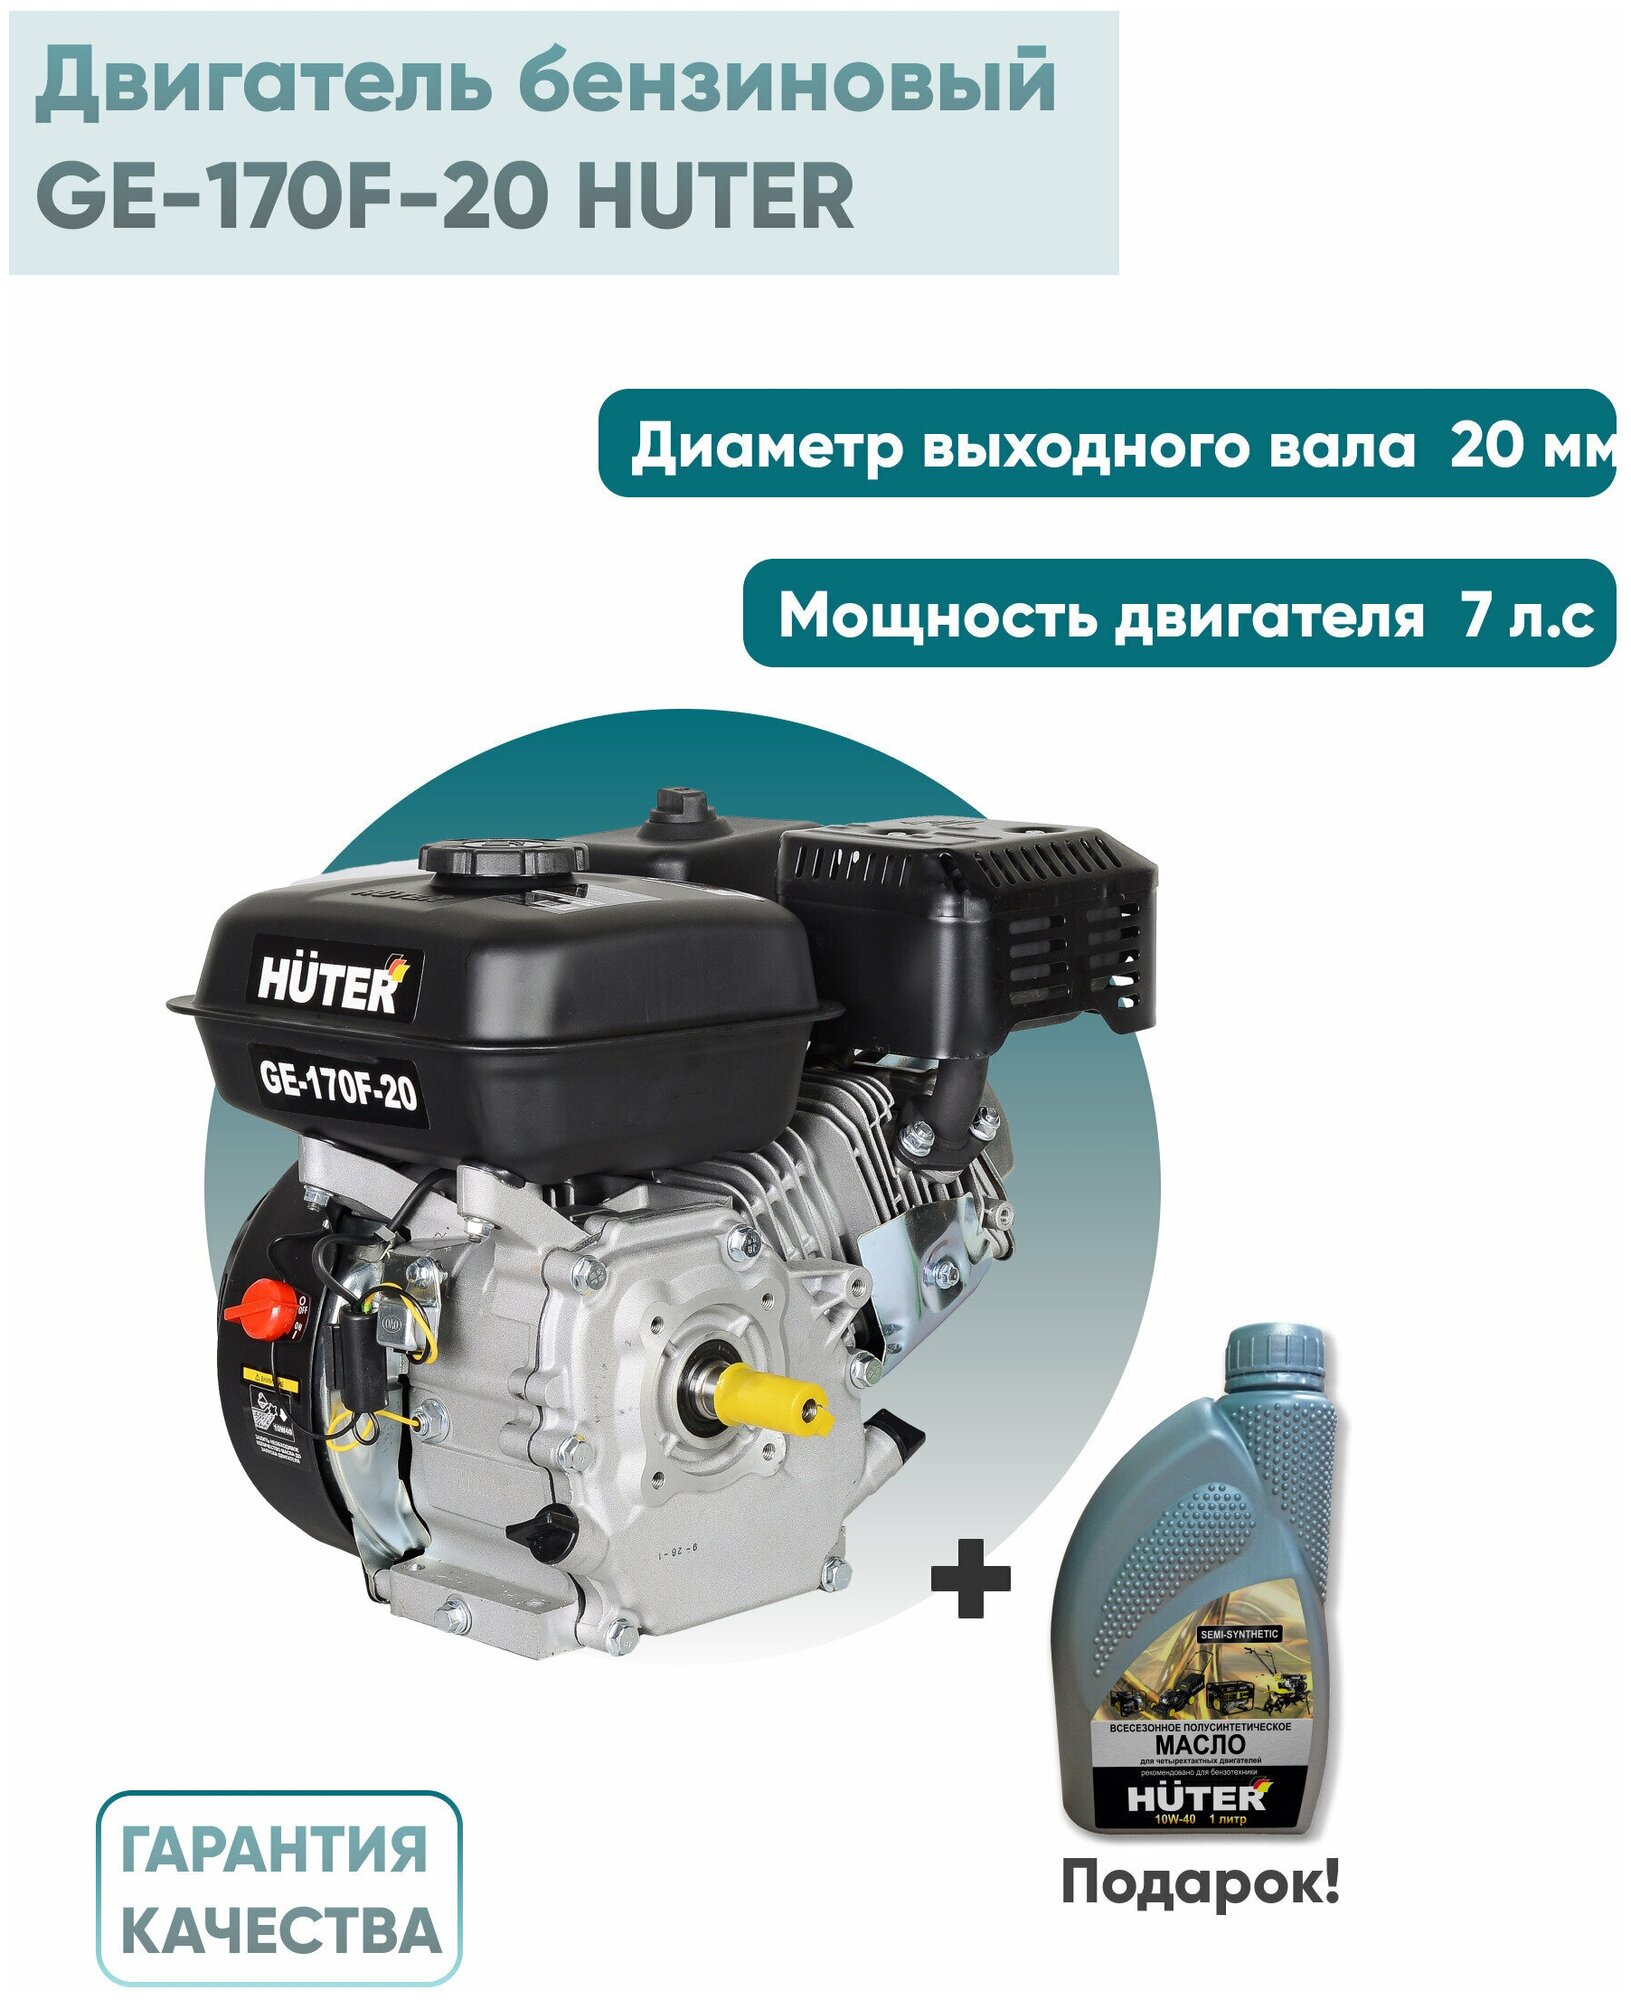 Двигатель бензиновый GE-170F-20 HUTER, Huter